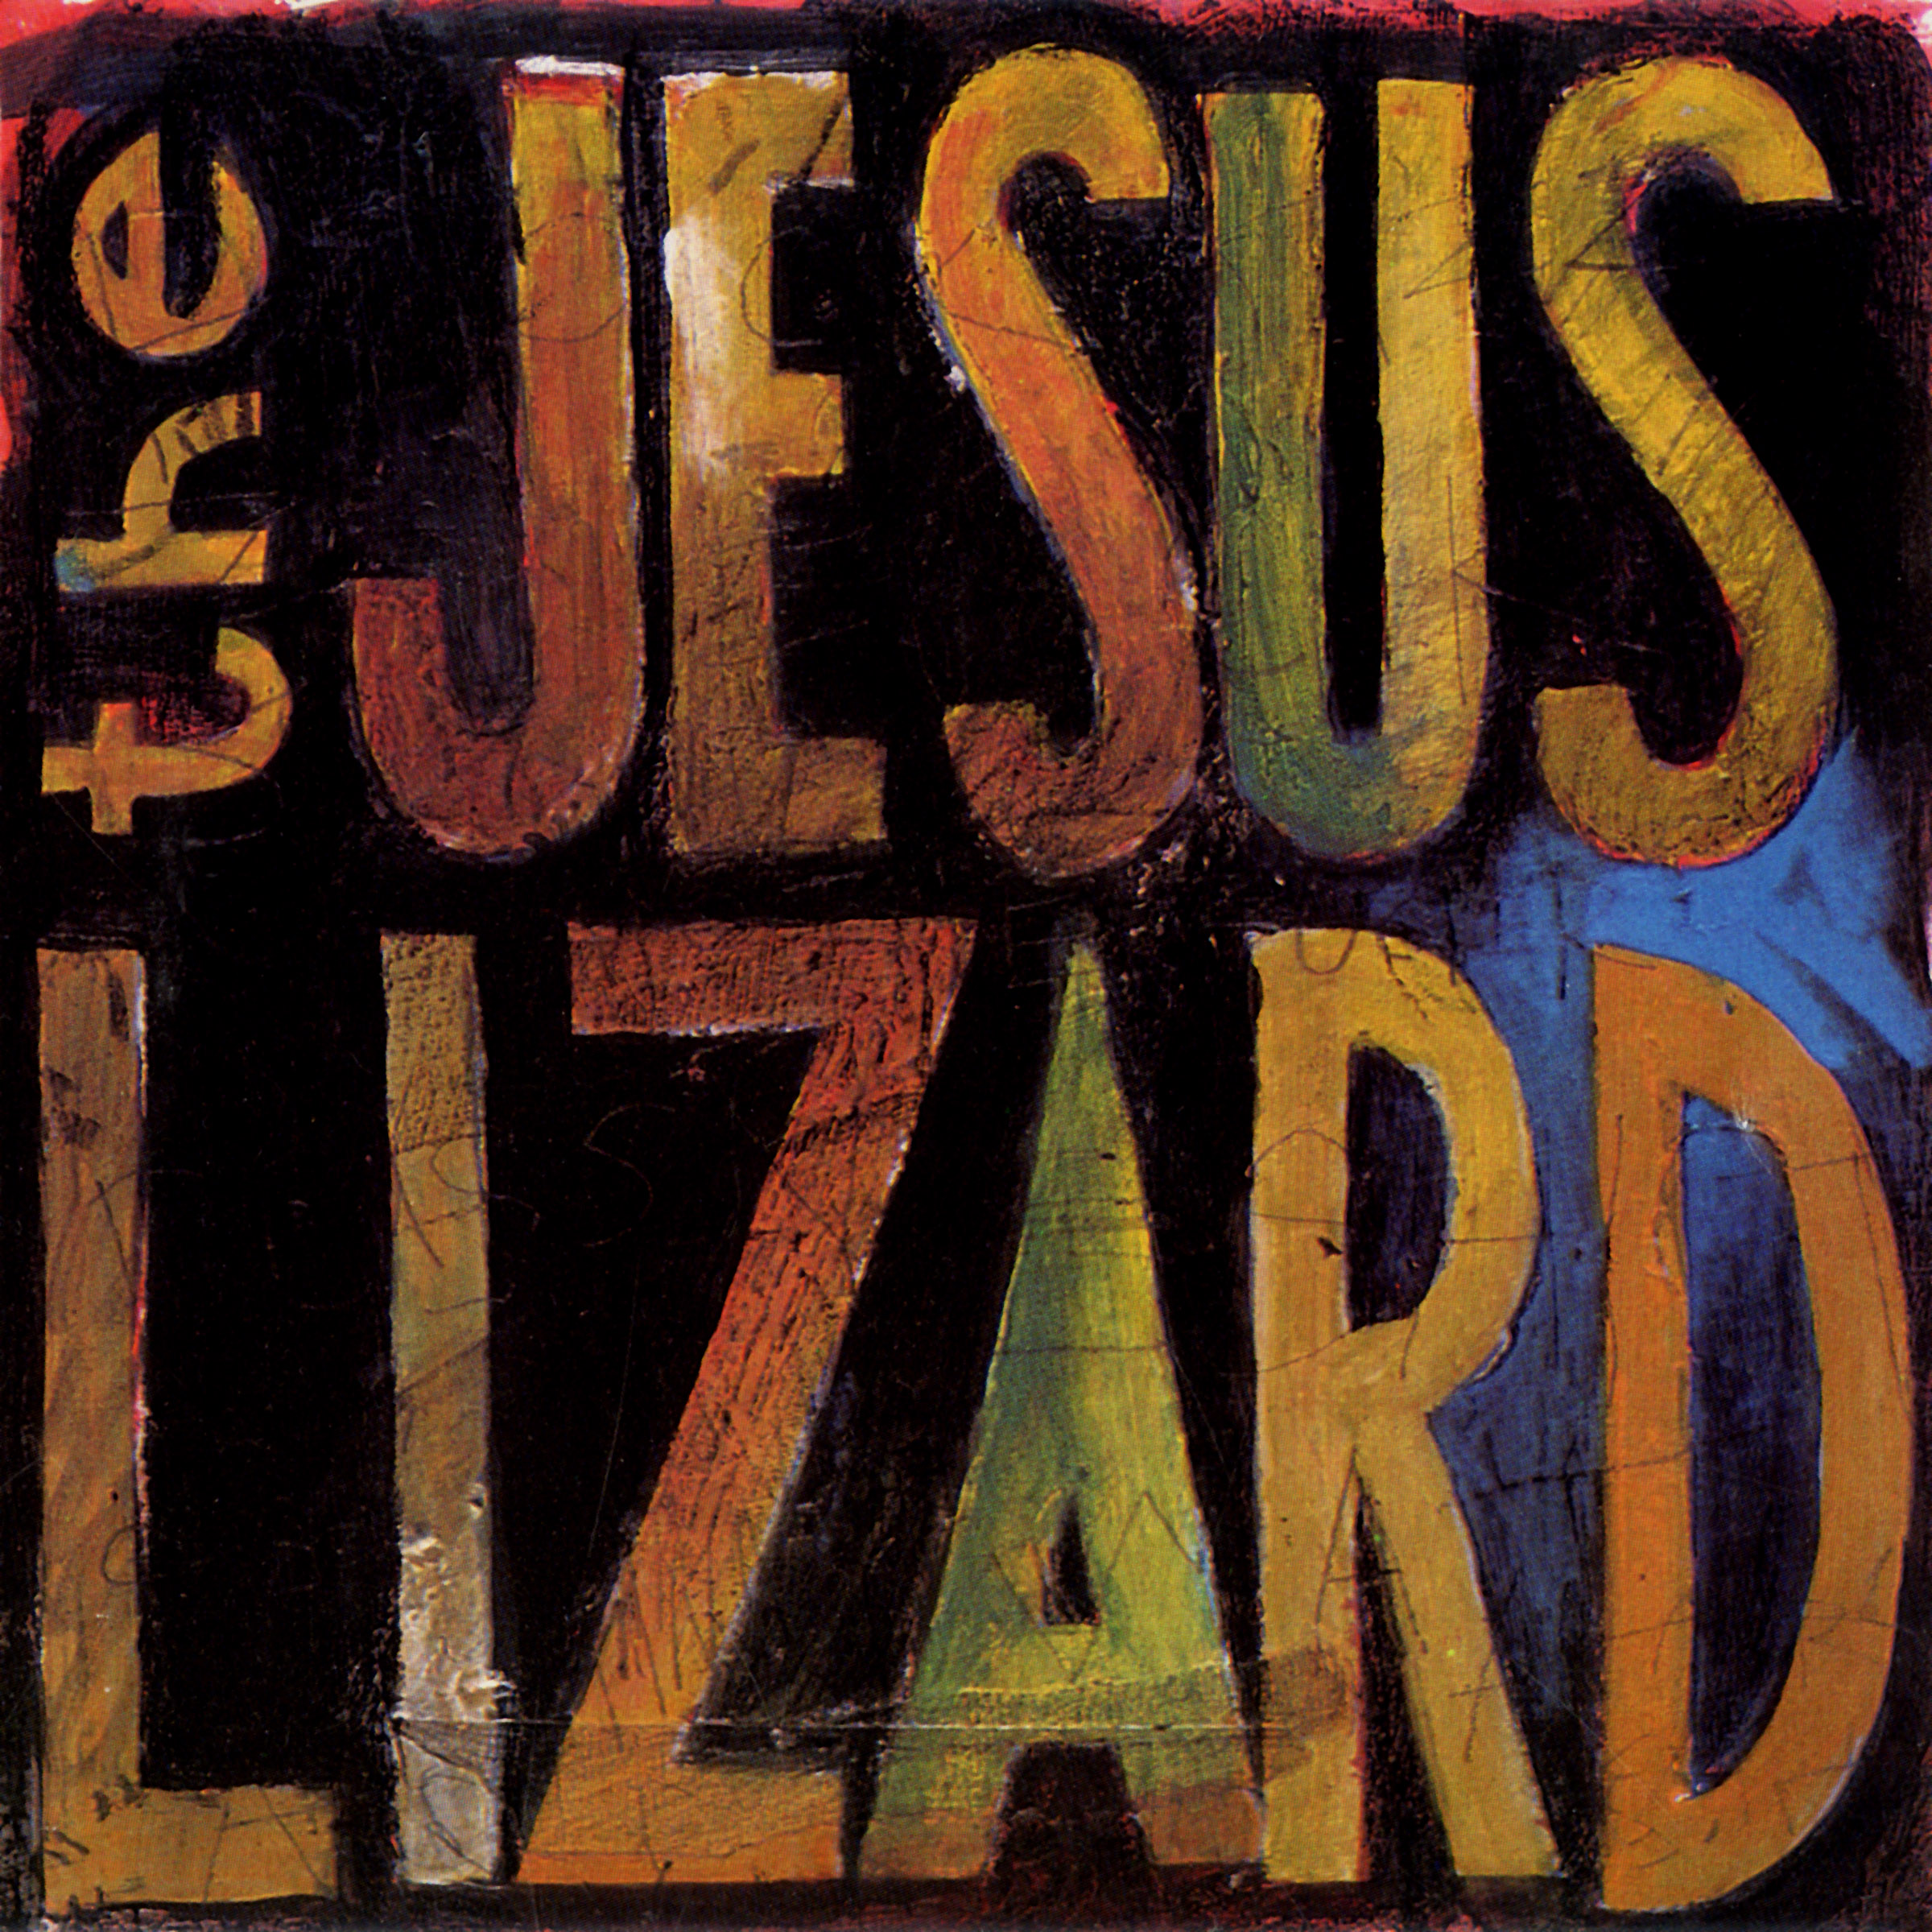 THE JESUS LIZARD - Lash cover 